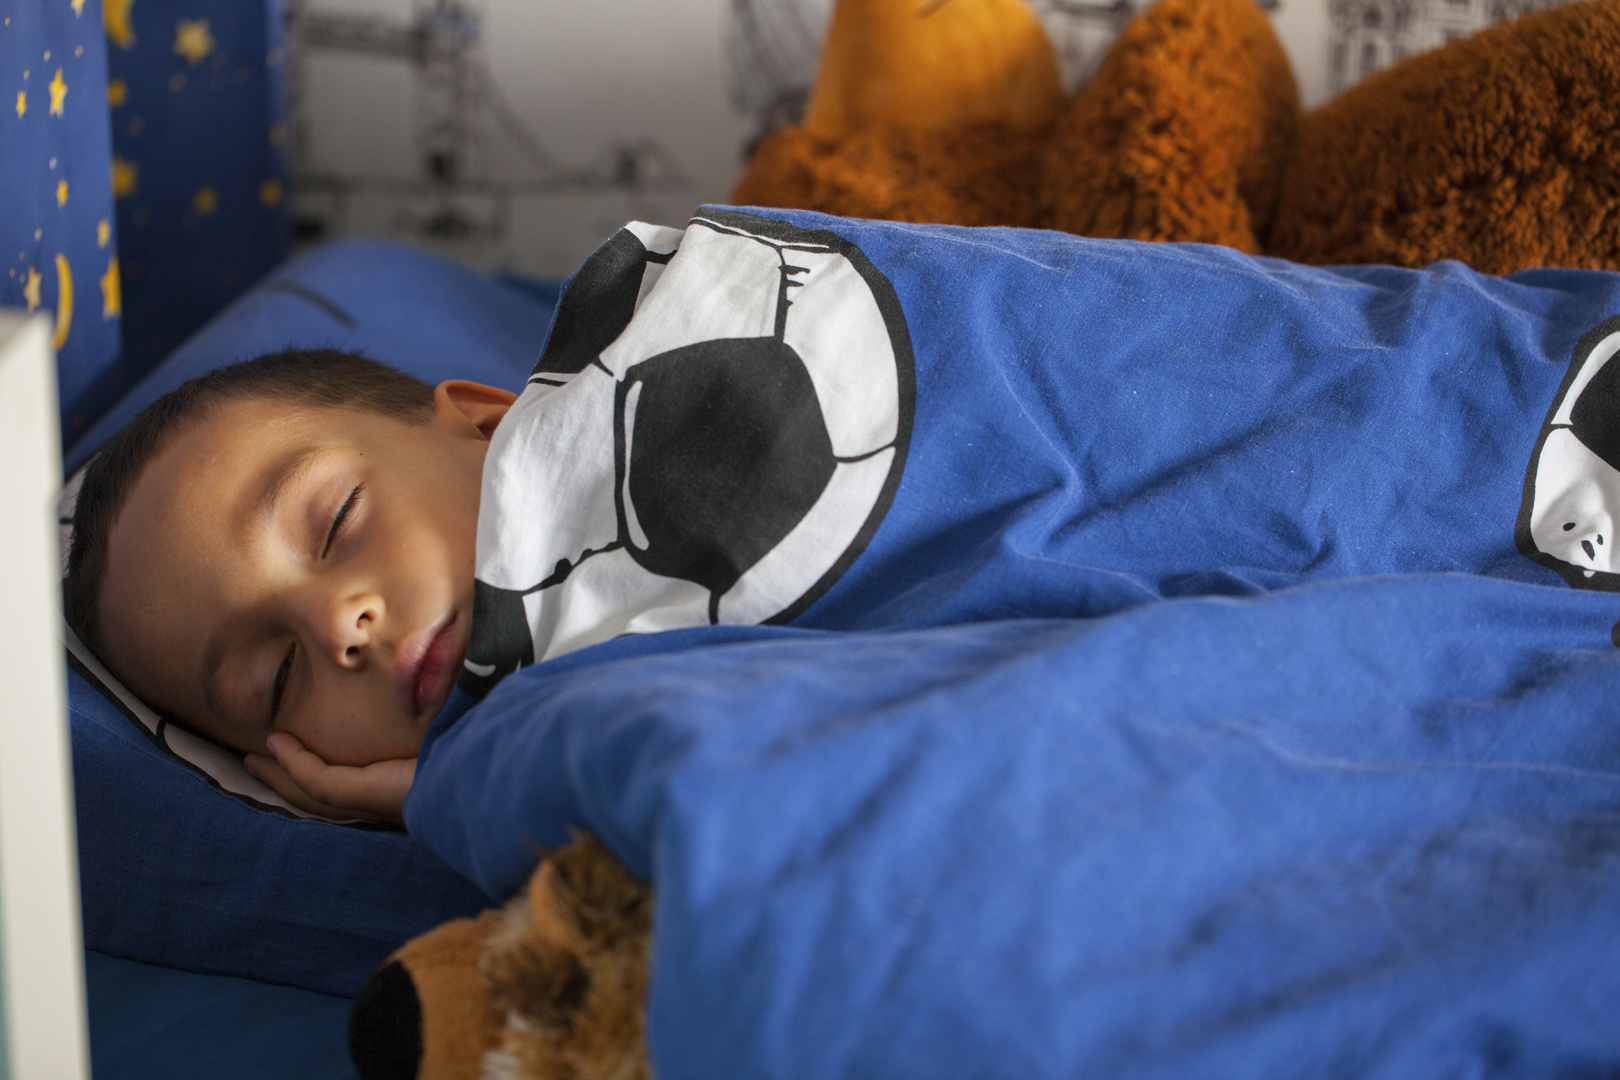 Why won't my toddler sleep? - Mayo Clinic Press